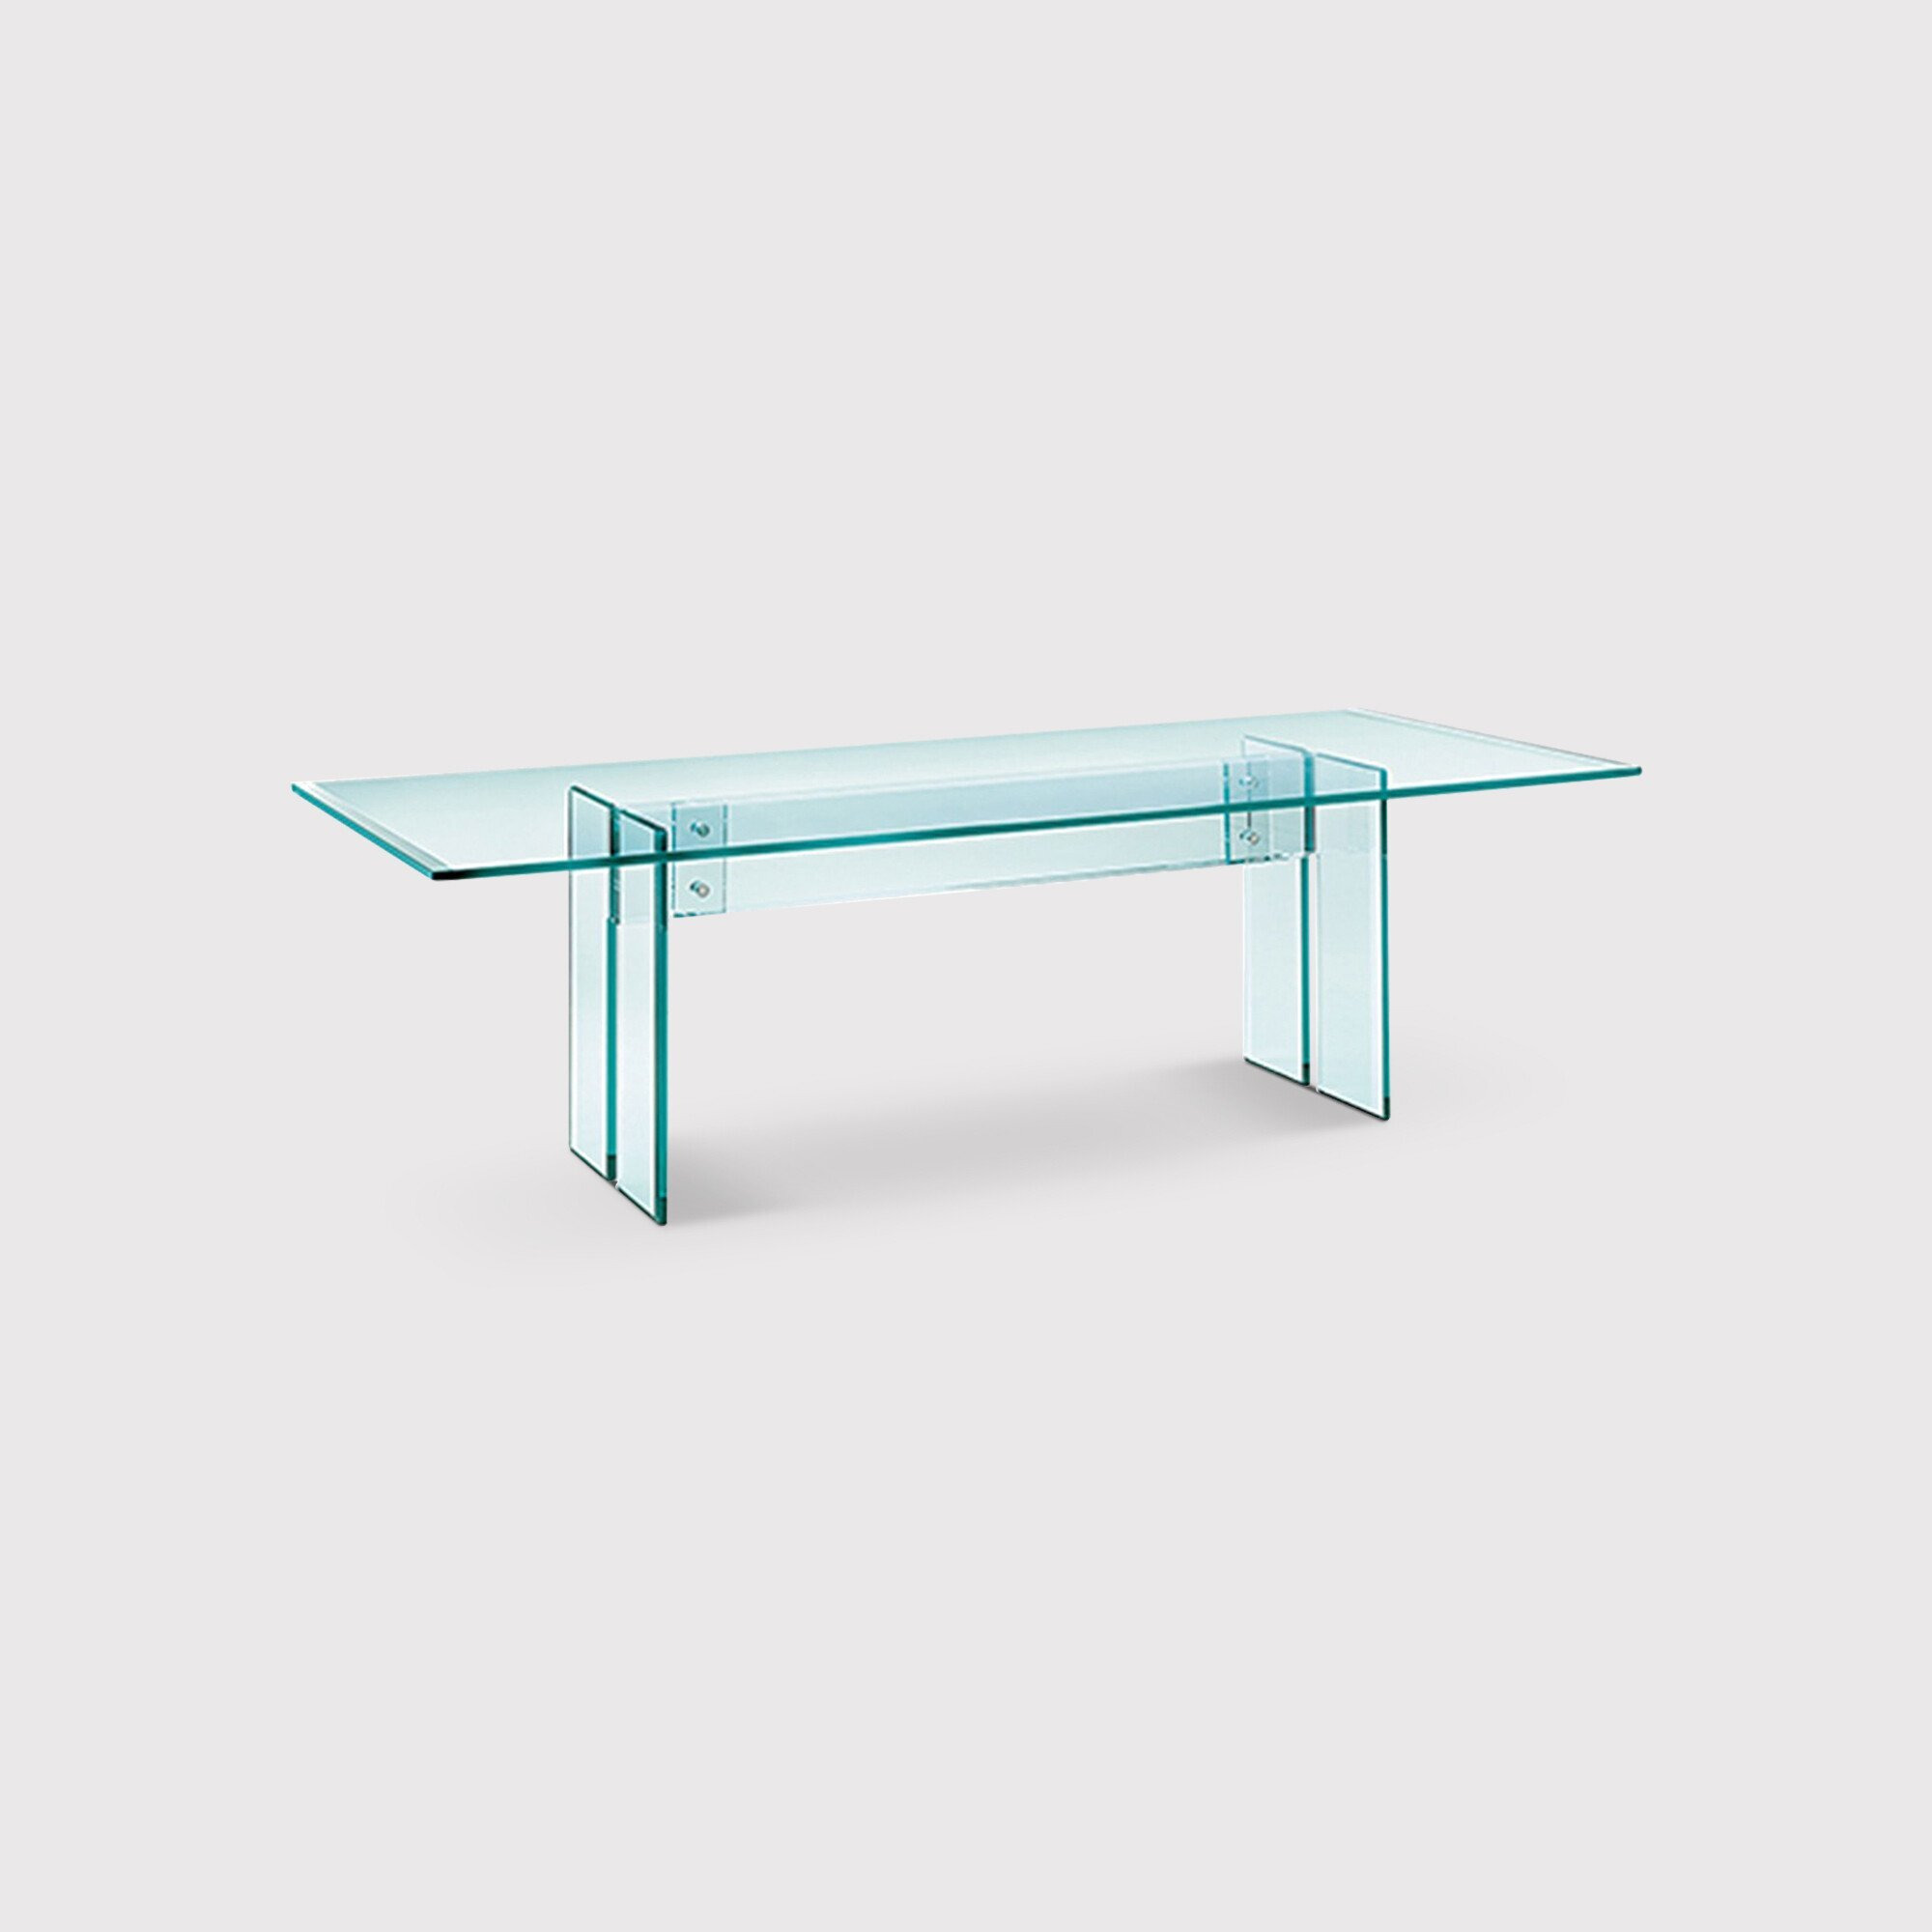 Fiam LLT Desk 160x70x72cm, Blue Glass - Barker & Stonehouse - image 1